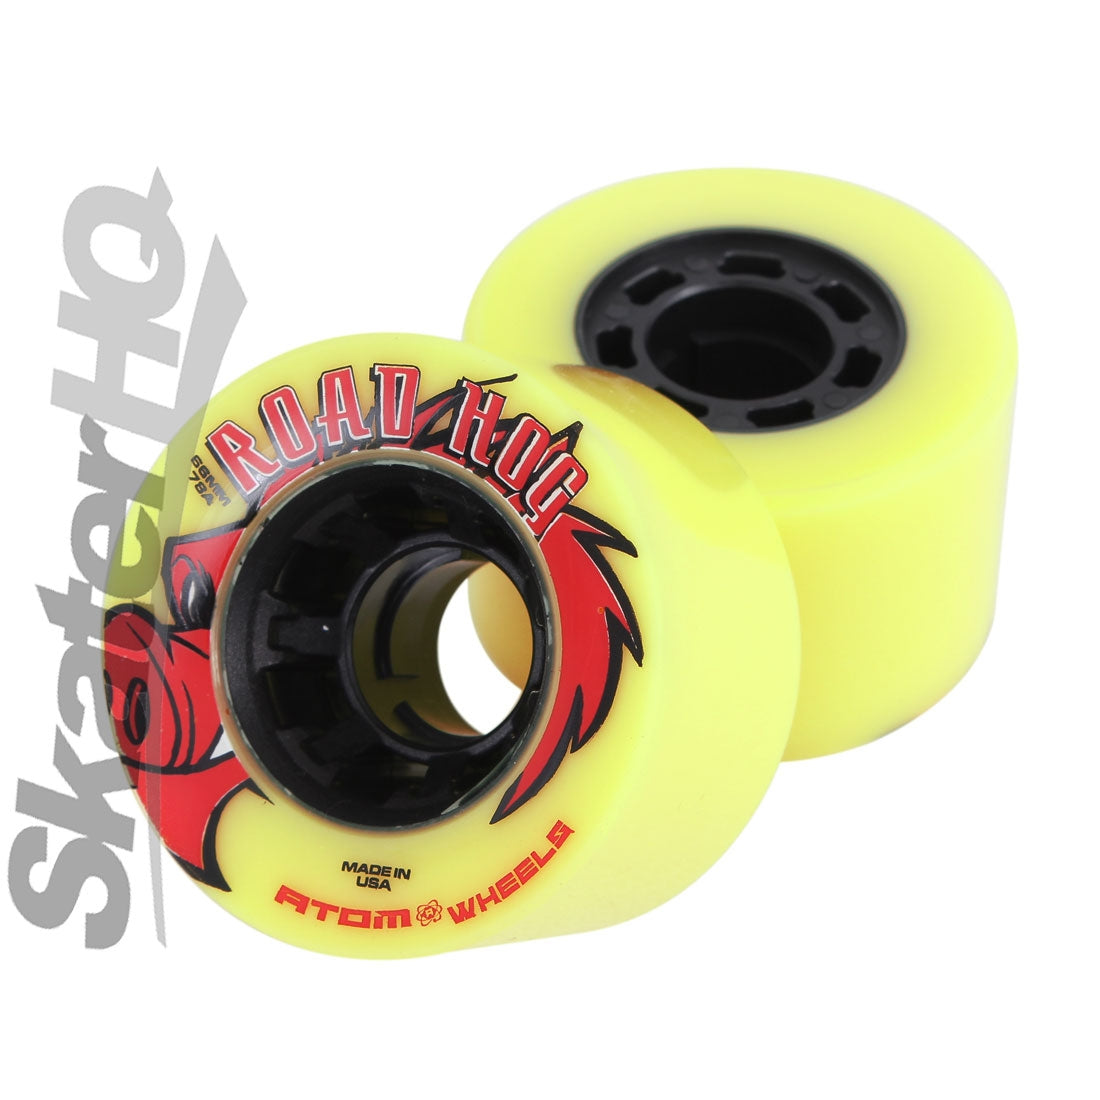 Atom Road Hog Quad 66x38mm/78a 4pk - Yellow Roller Skate Wheels